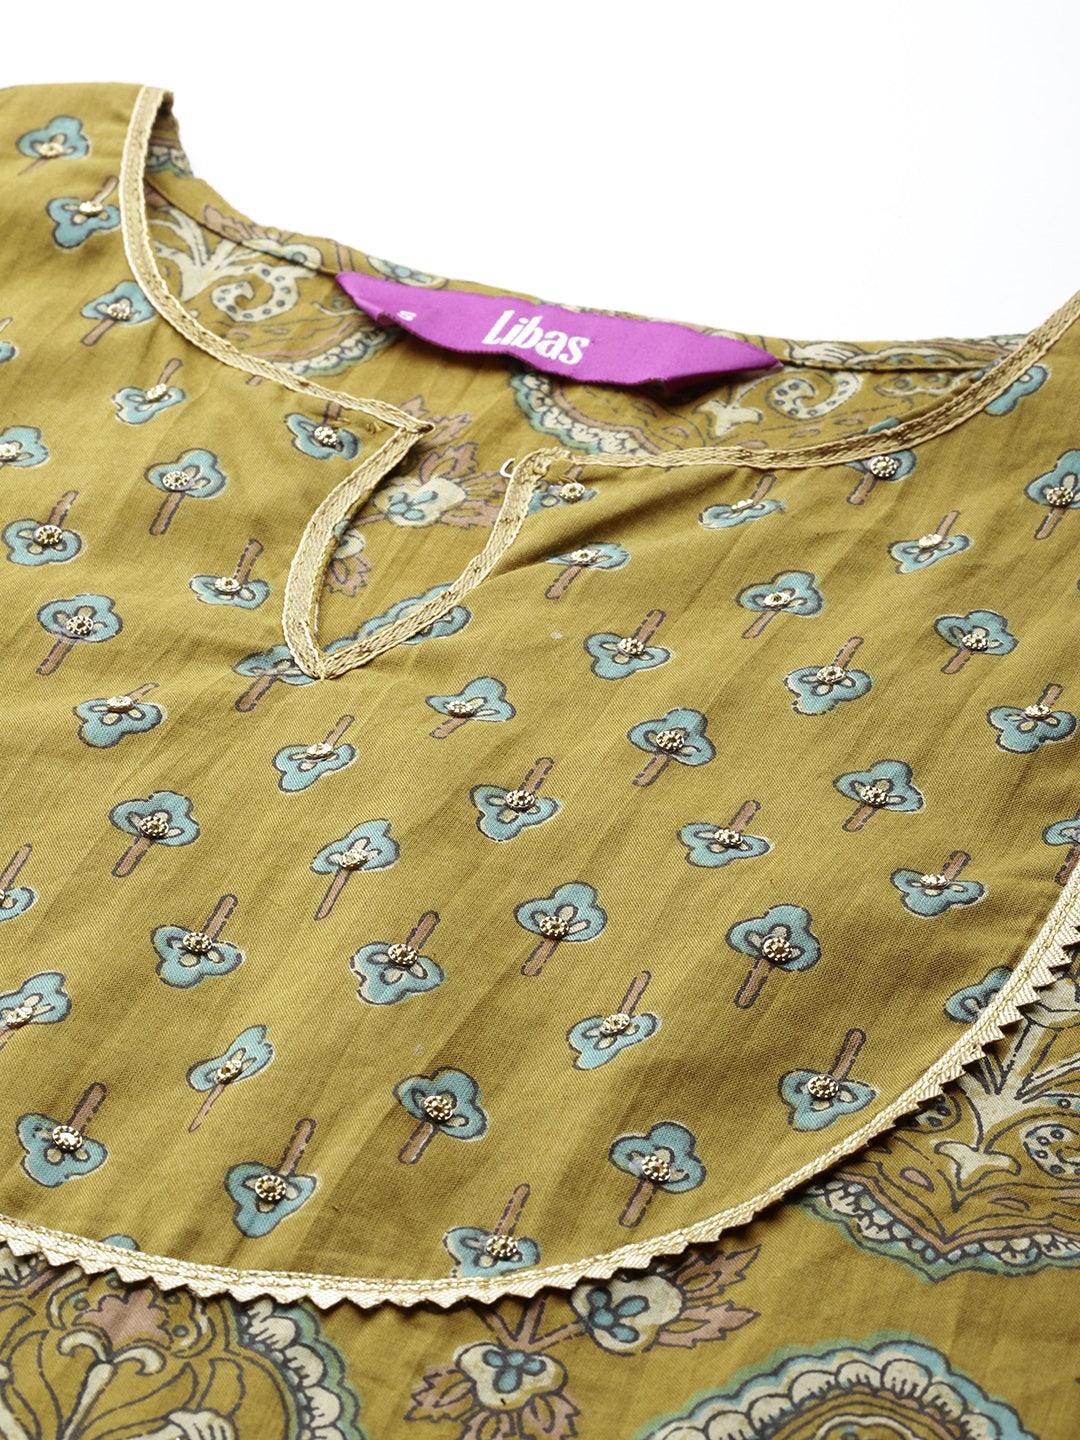 Mustard Printed Cotton Anarkali Kurta With Trousers & Dupatta - Libas